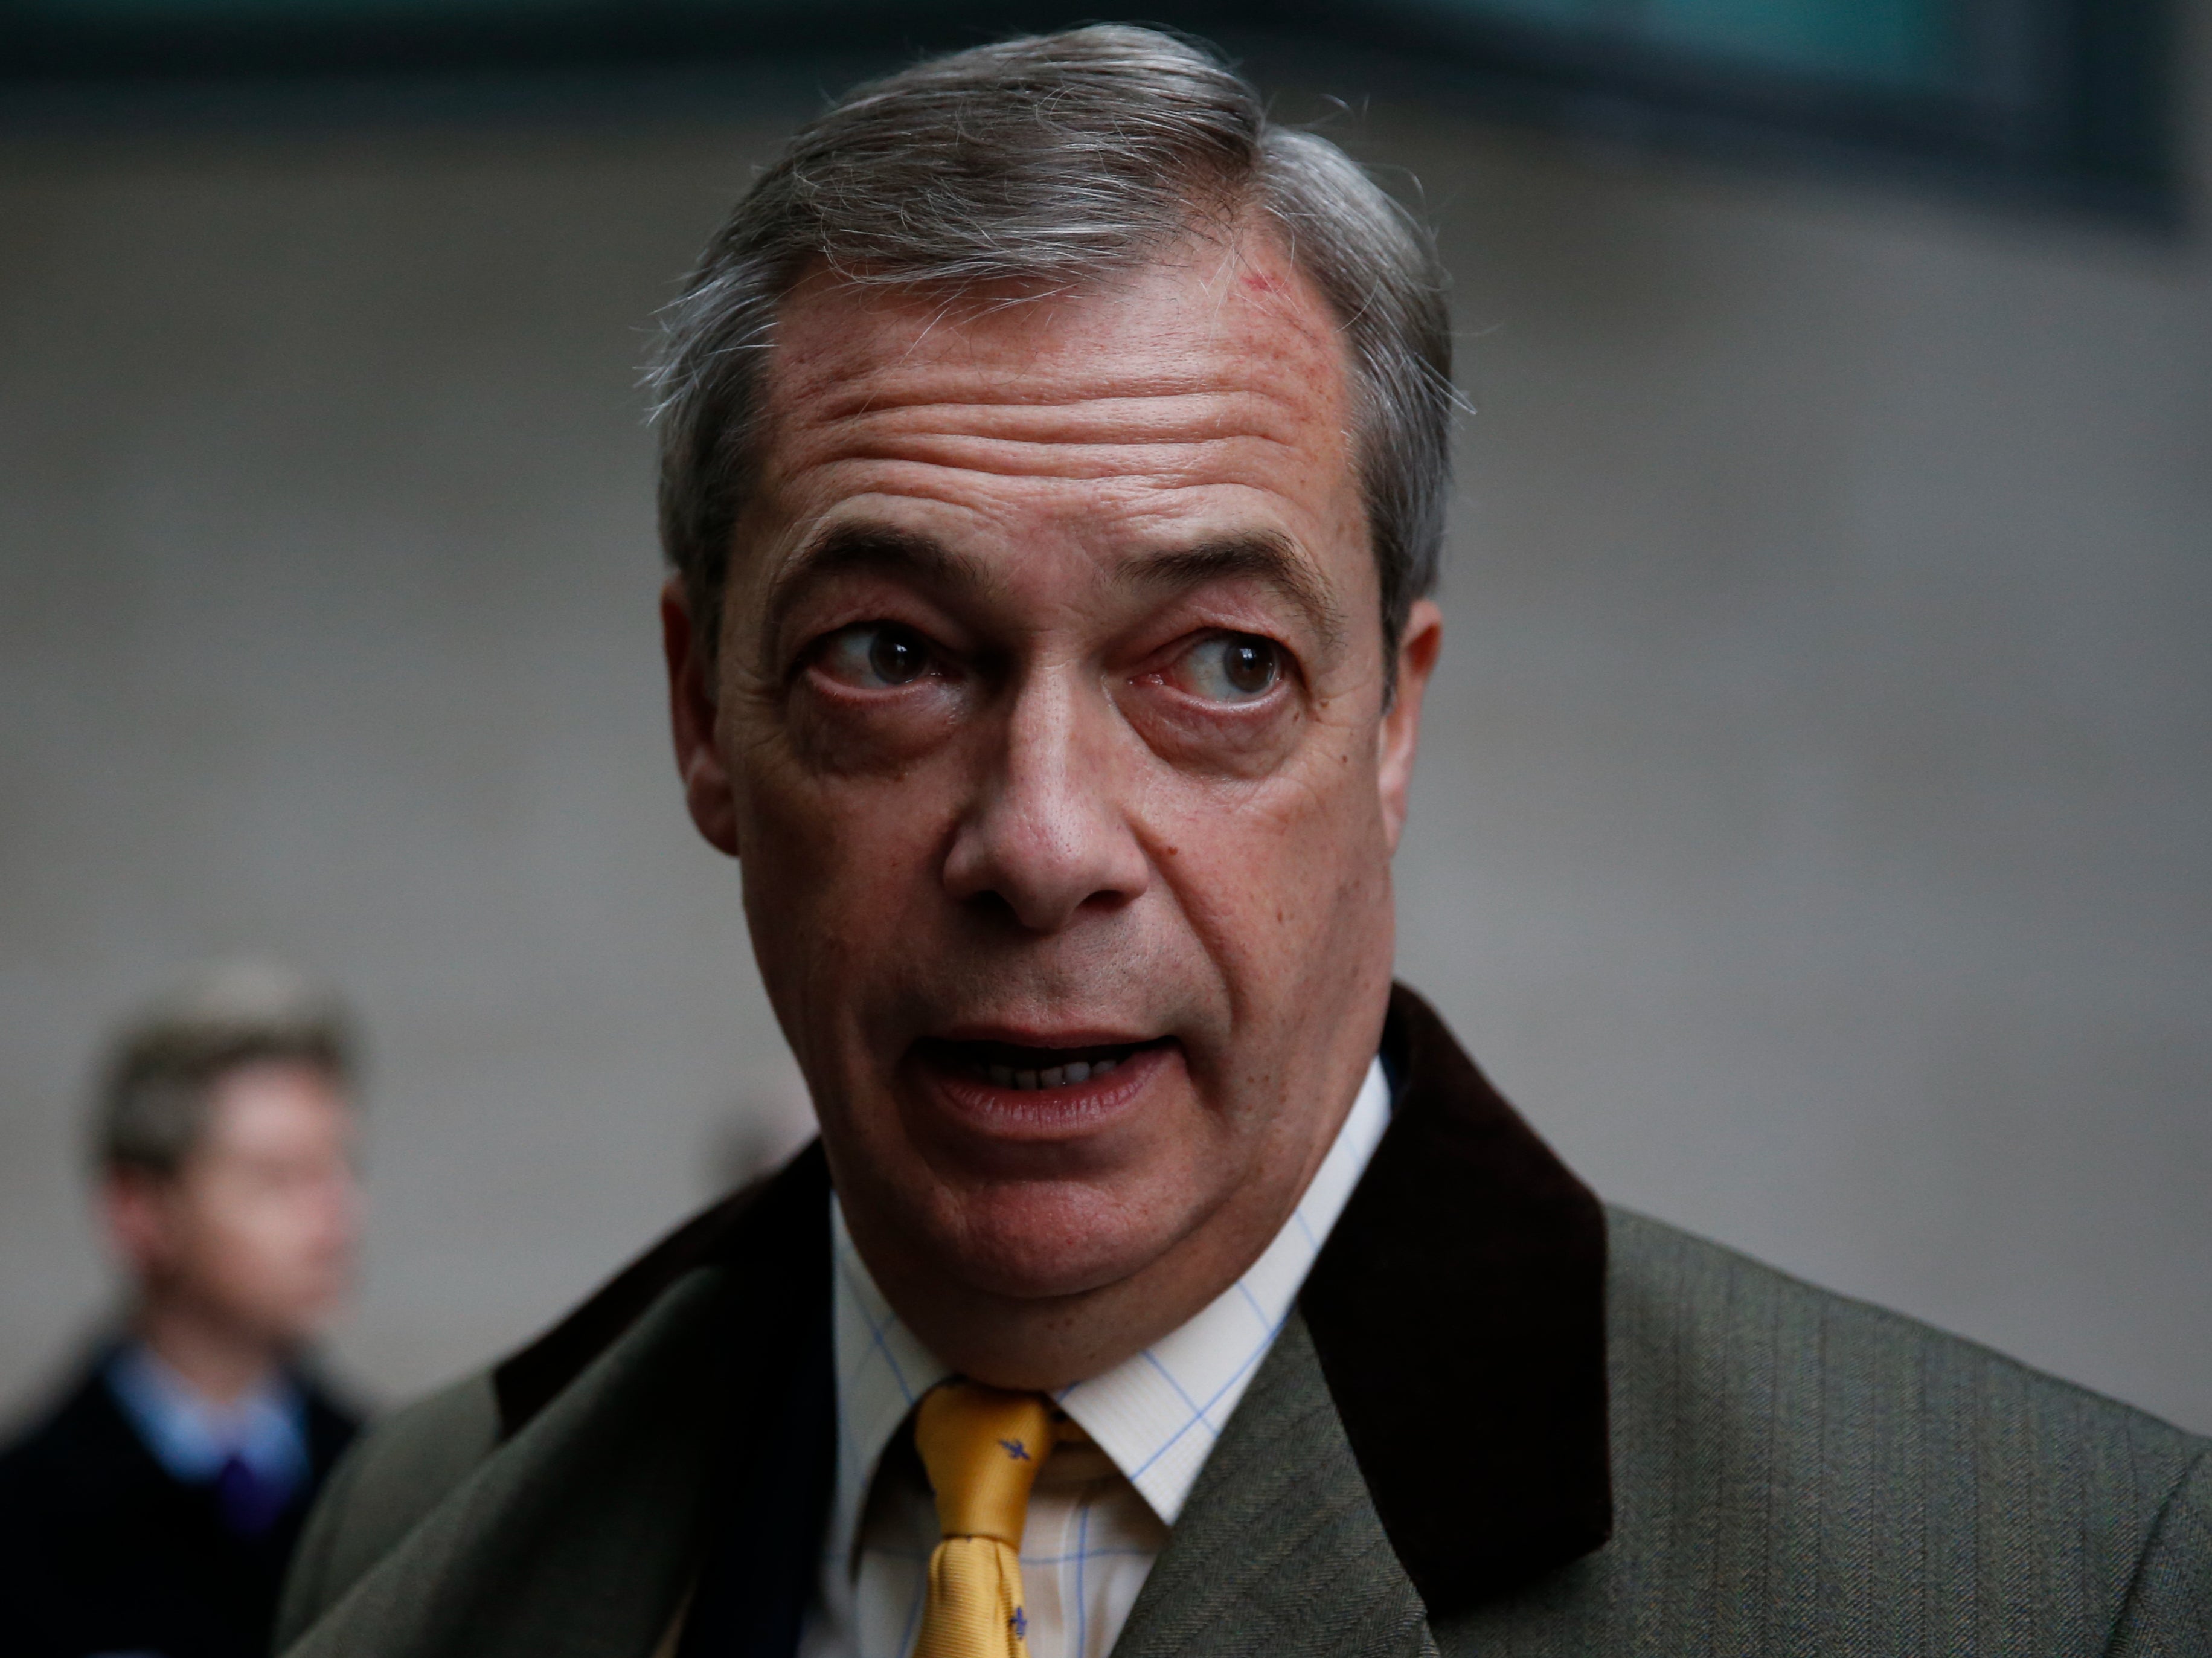 Nigel Farage, former Ukip and Brexit party leader